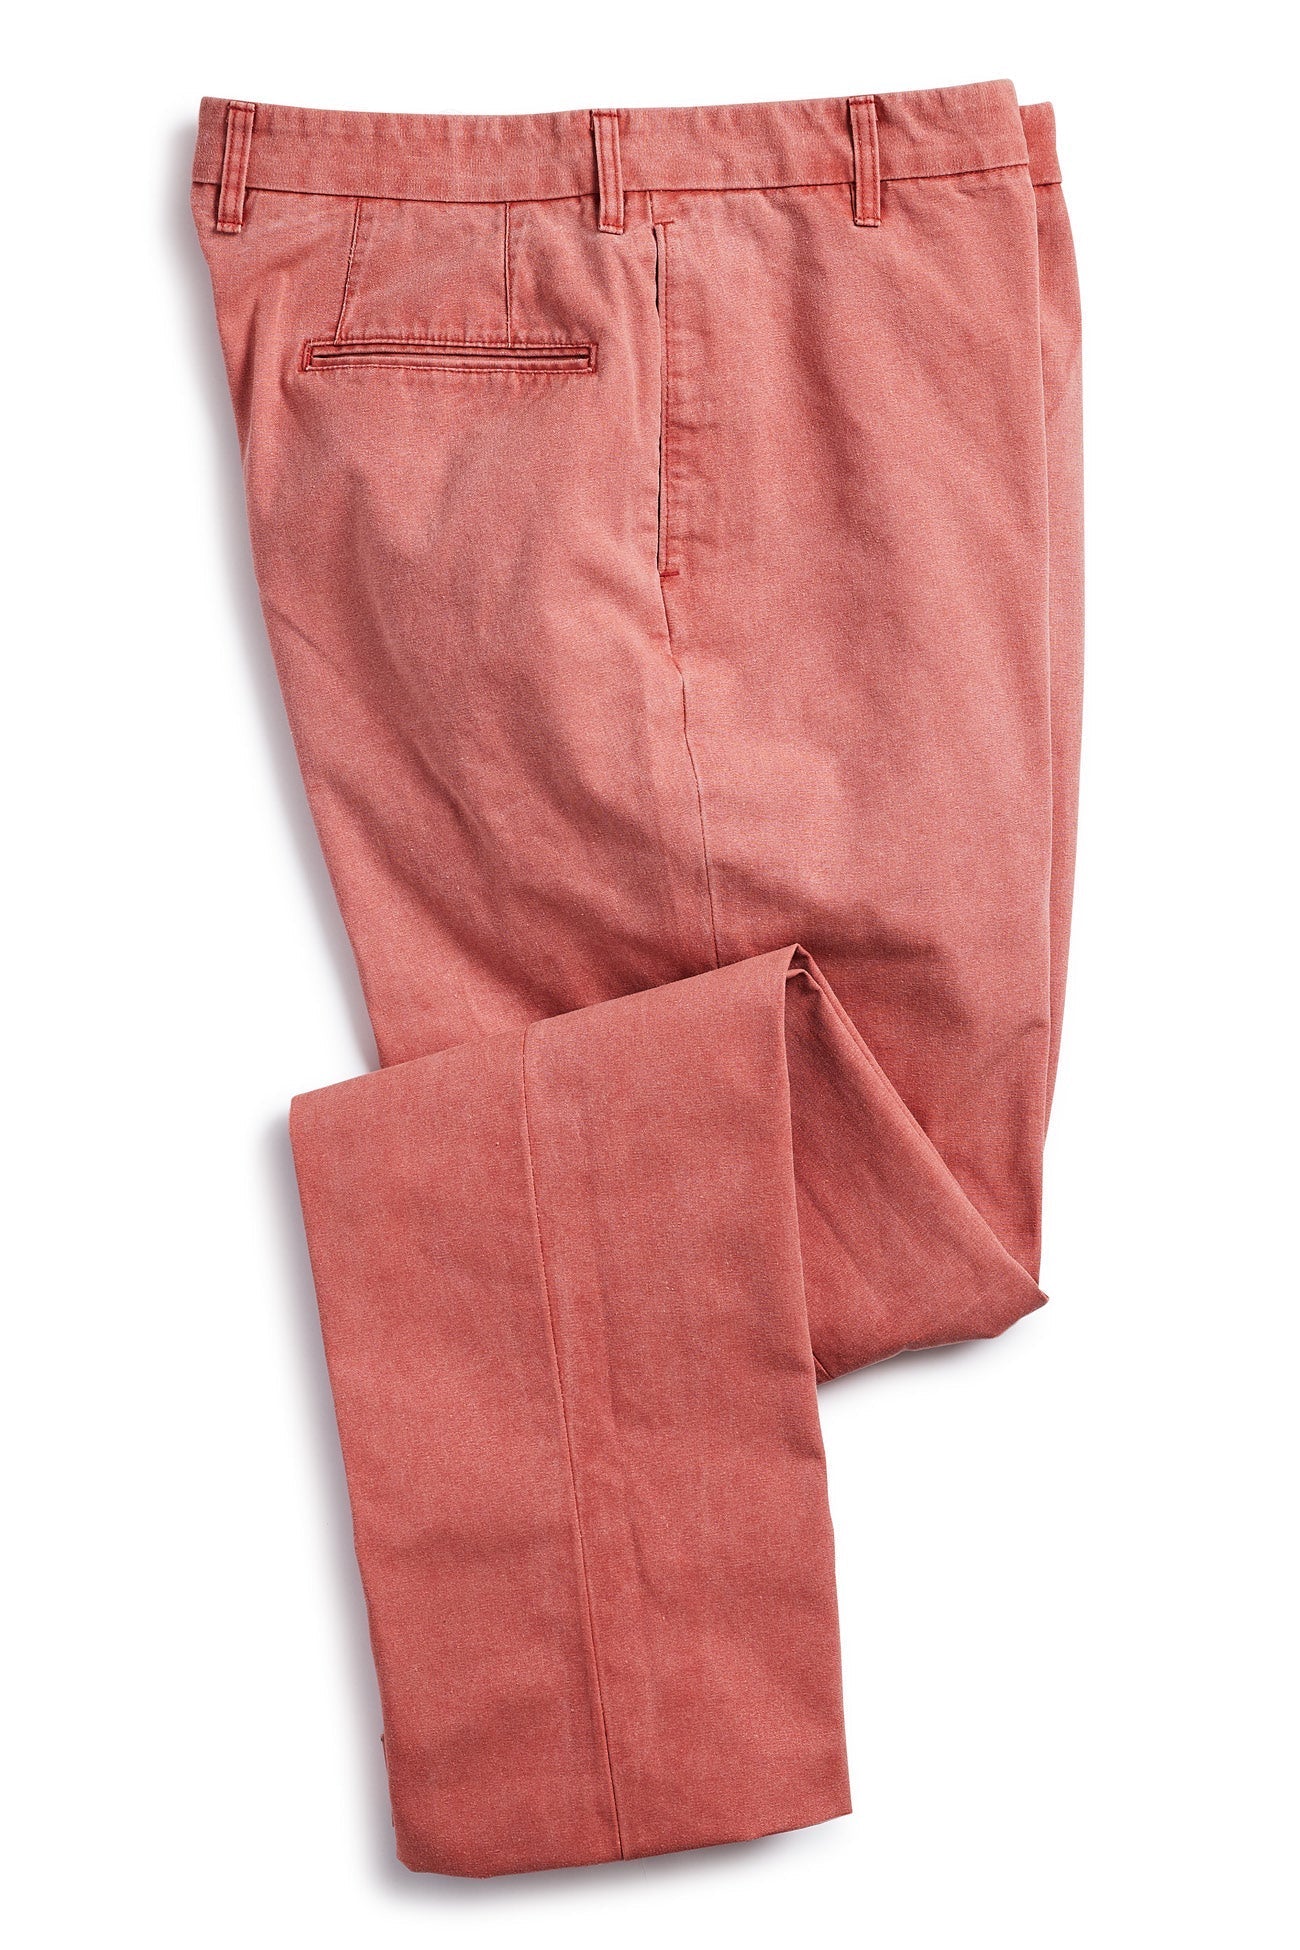 Murray's Toggery Shop Nantucket Reds® Pants